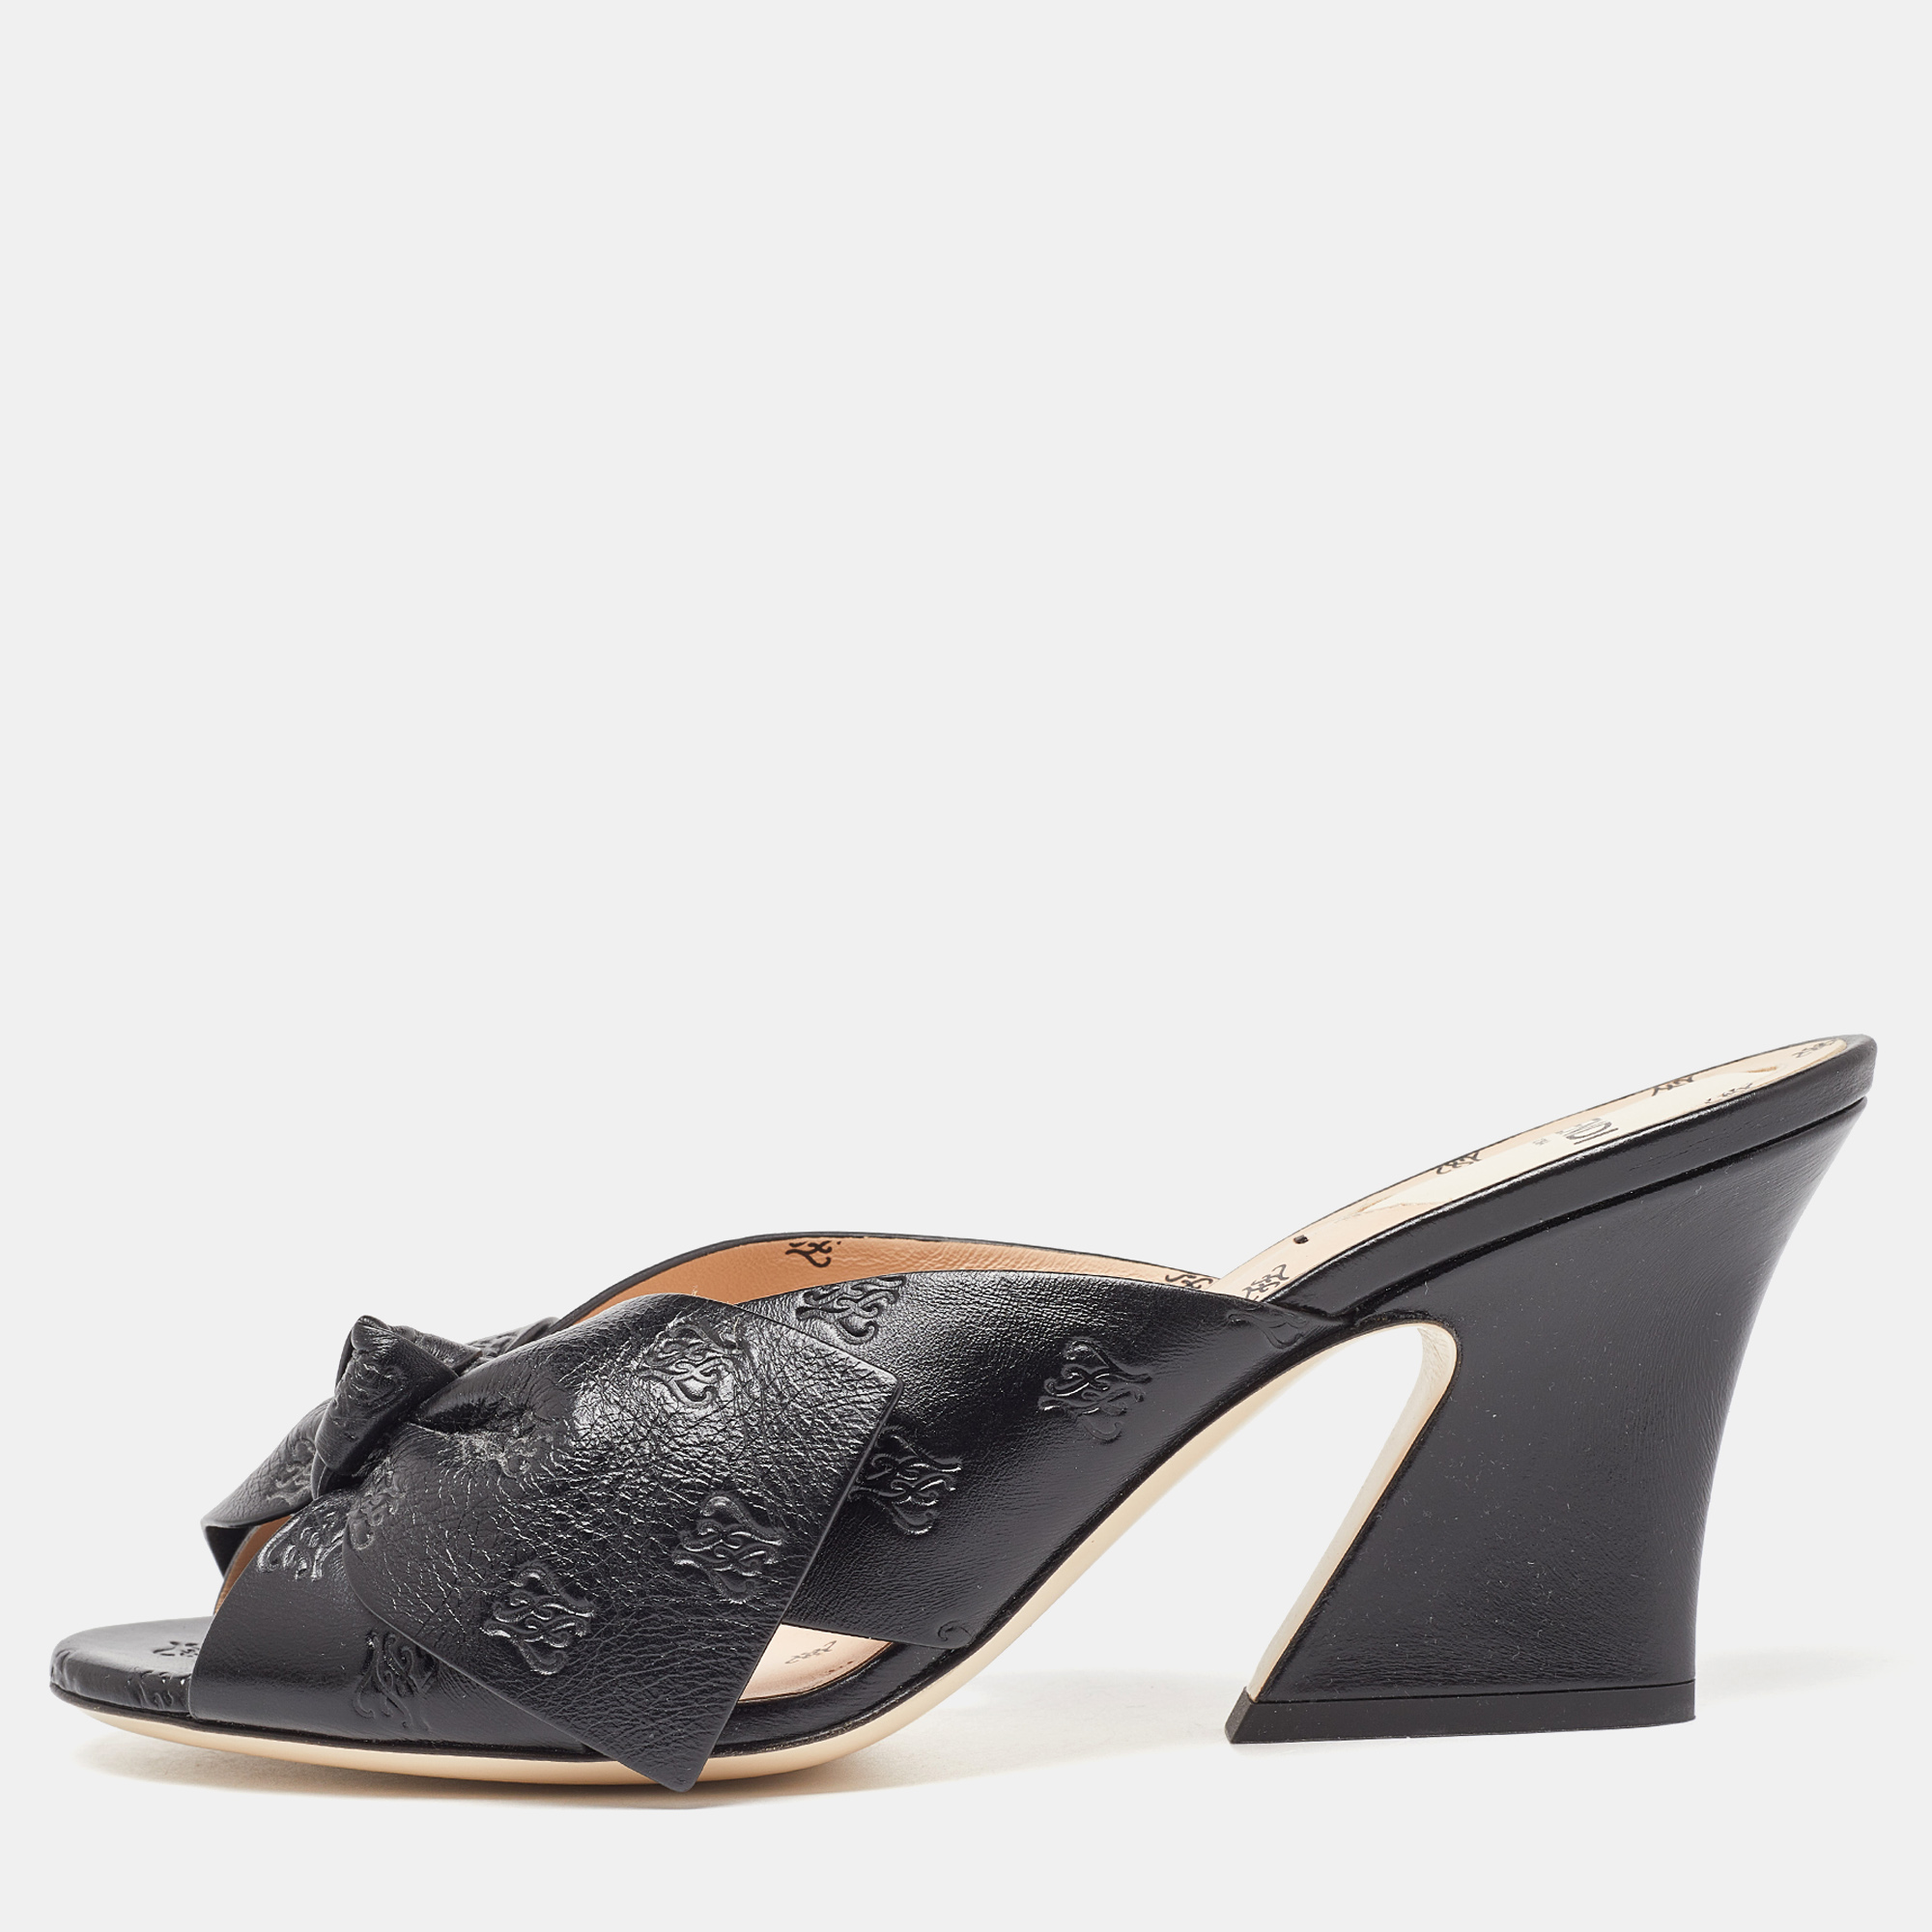 Fendi Black Leather Bow FF Karligraphy Slide Sandals Size 41